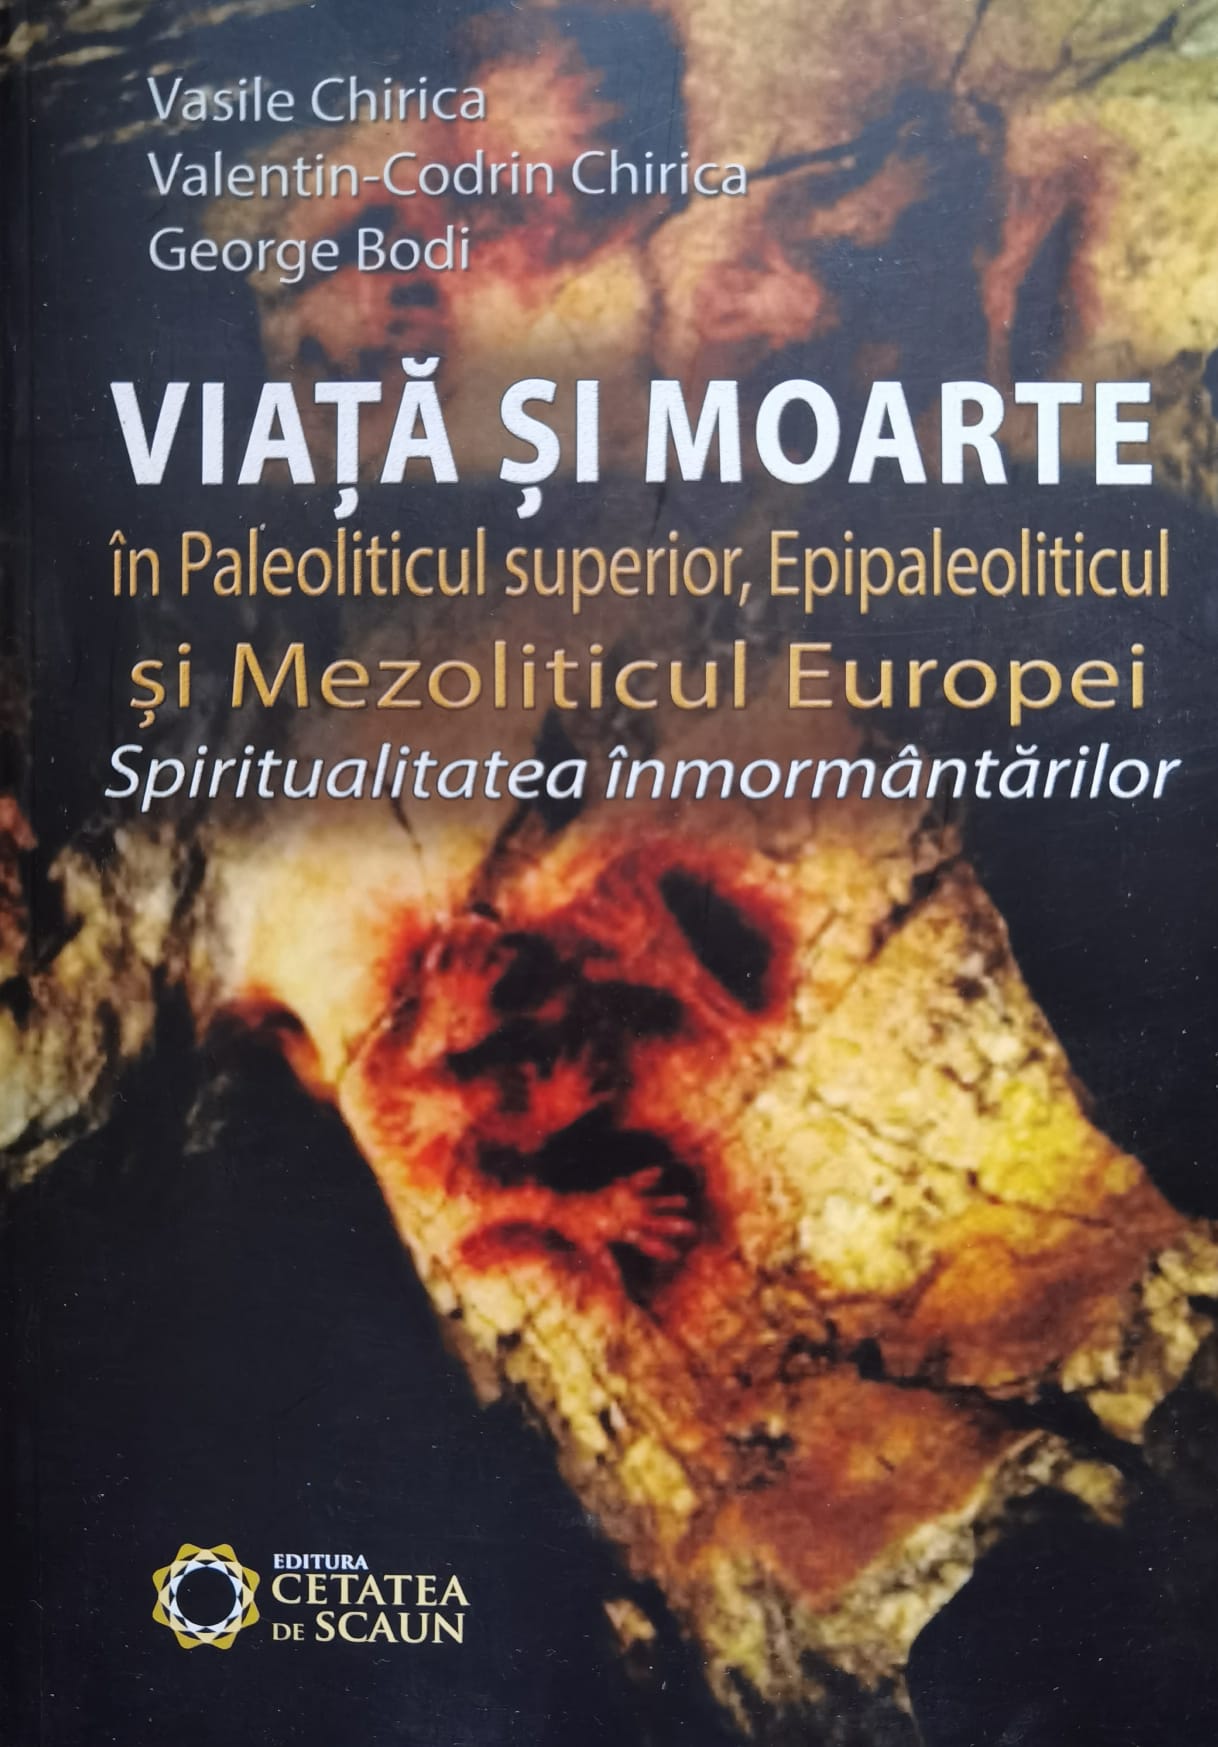 viata si moarte in paleoliticul superior, epipaleoliticul si mezoliticul europei                     vasile chirica                                                                                      